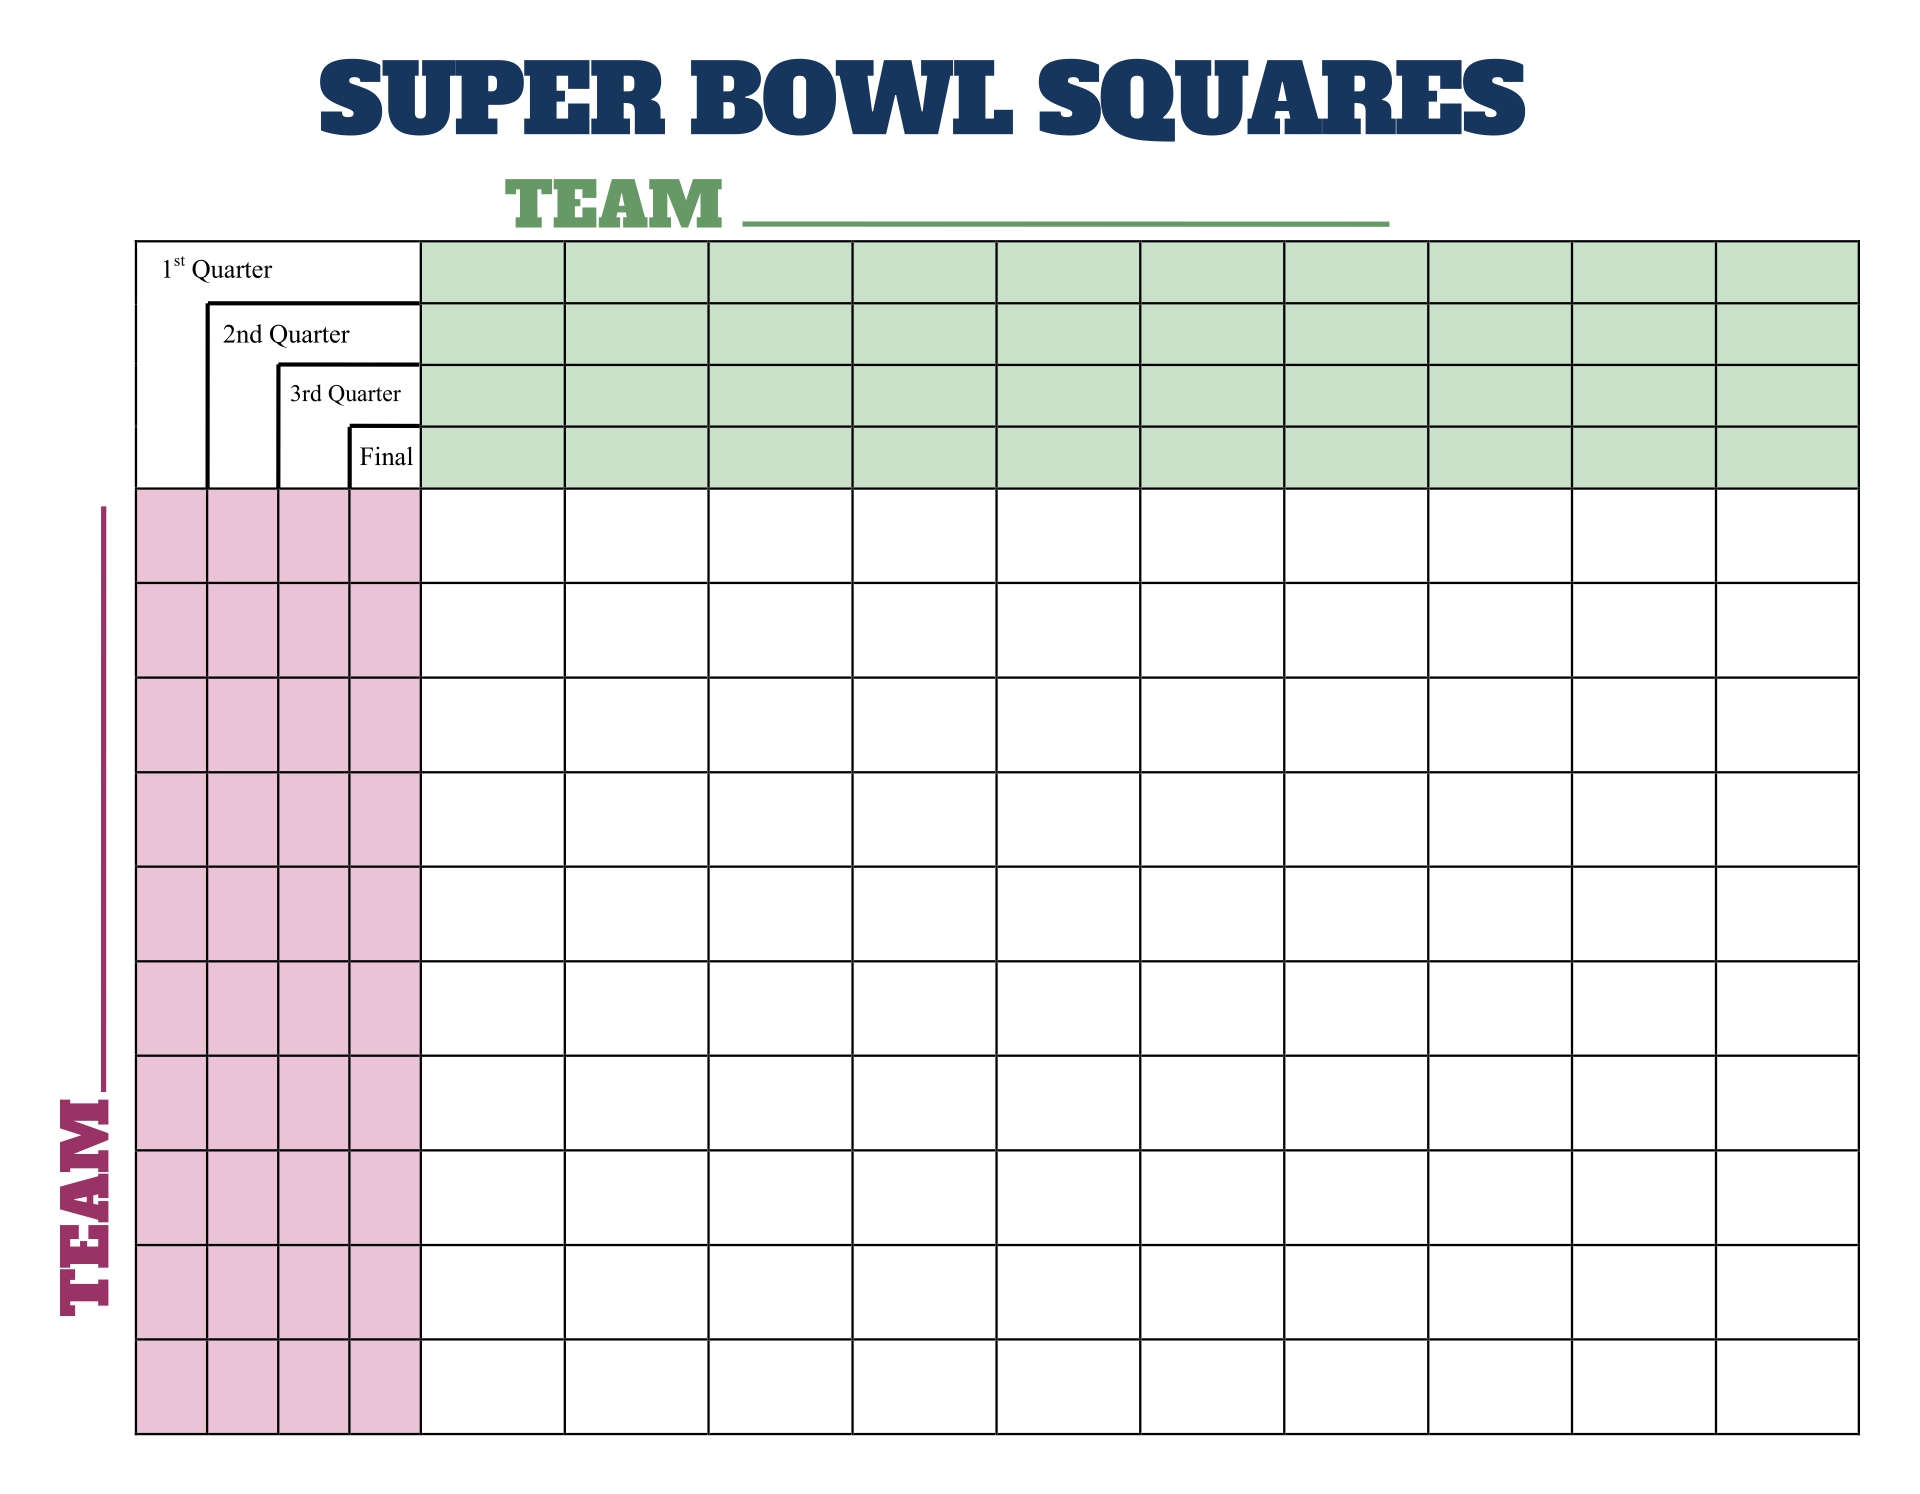 8-best-images-of-super-bowl-football-squares-printable-super-bowl